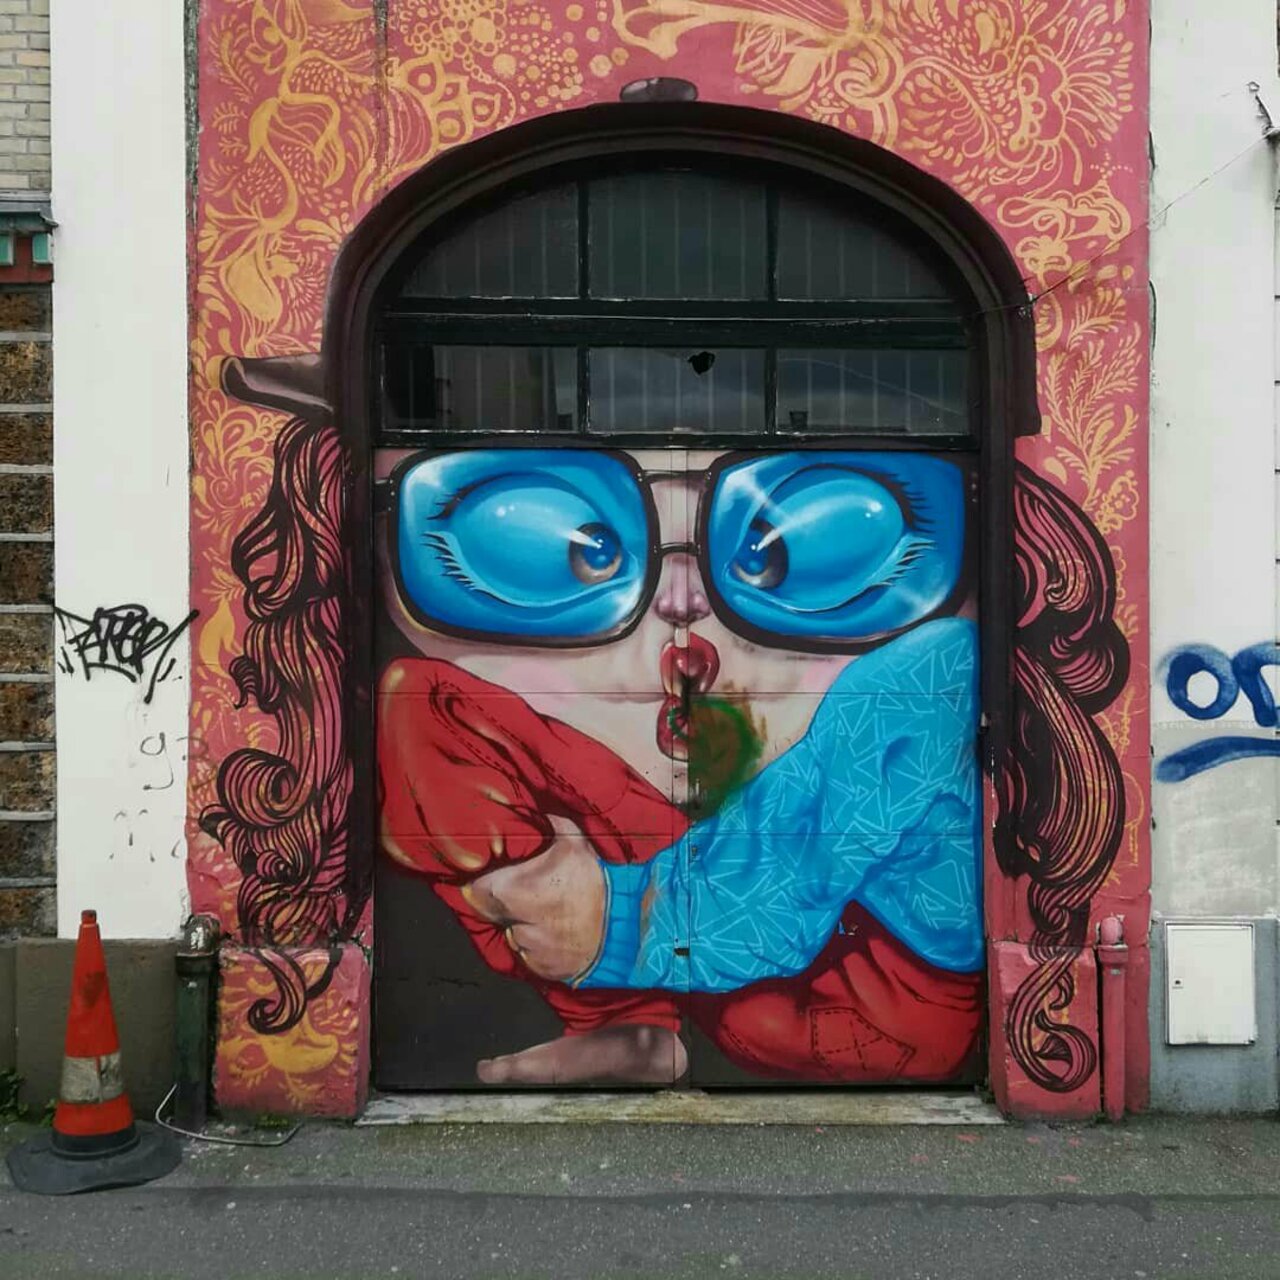 Funny character by @Skio1 in #Bagnolet, #Paris, #France. -- #streetart #art #graffiti #globalstreetart https://t.co/bVdwxmSdcu